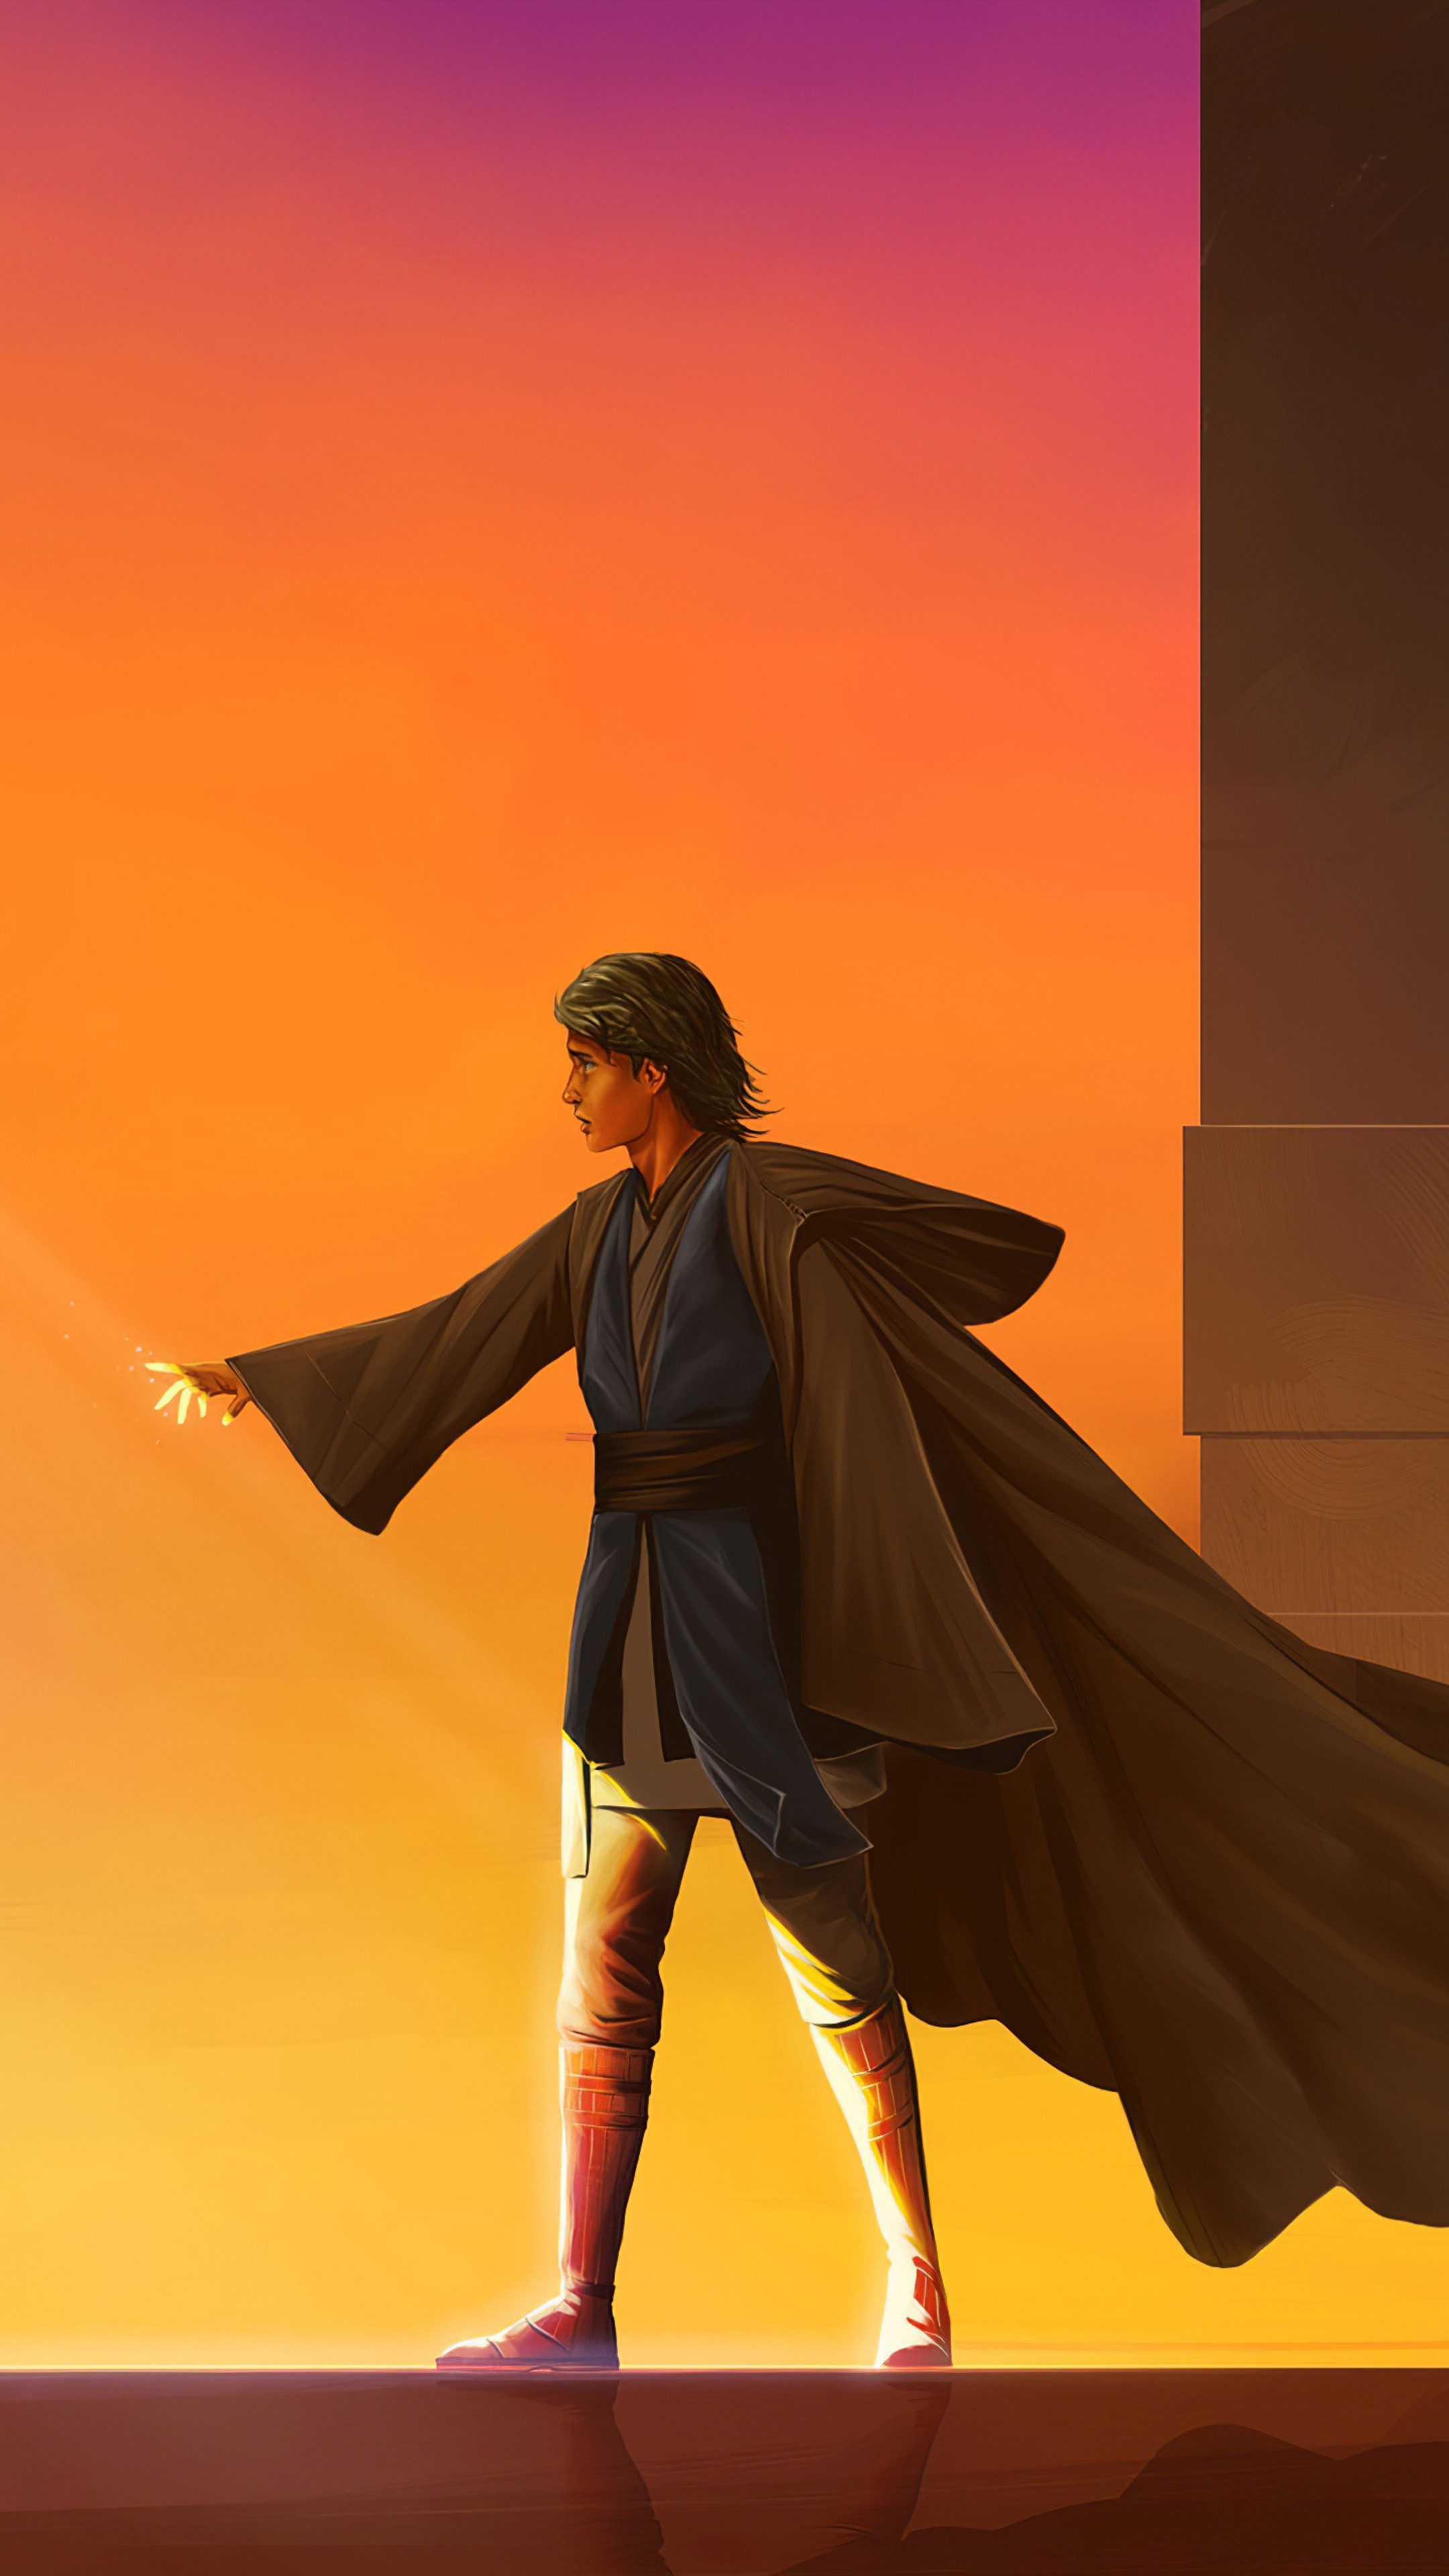 Anakin lightsaber against a sunset background - Star Wars